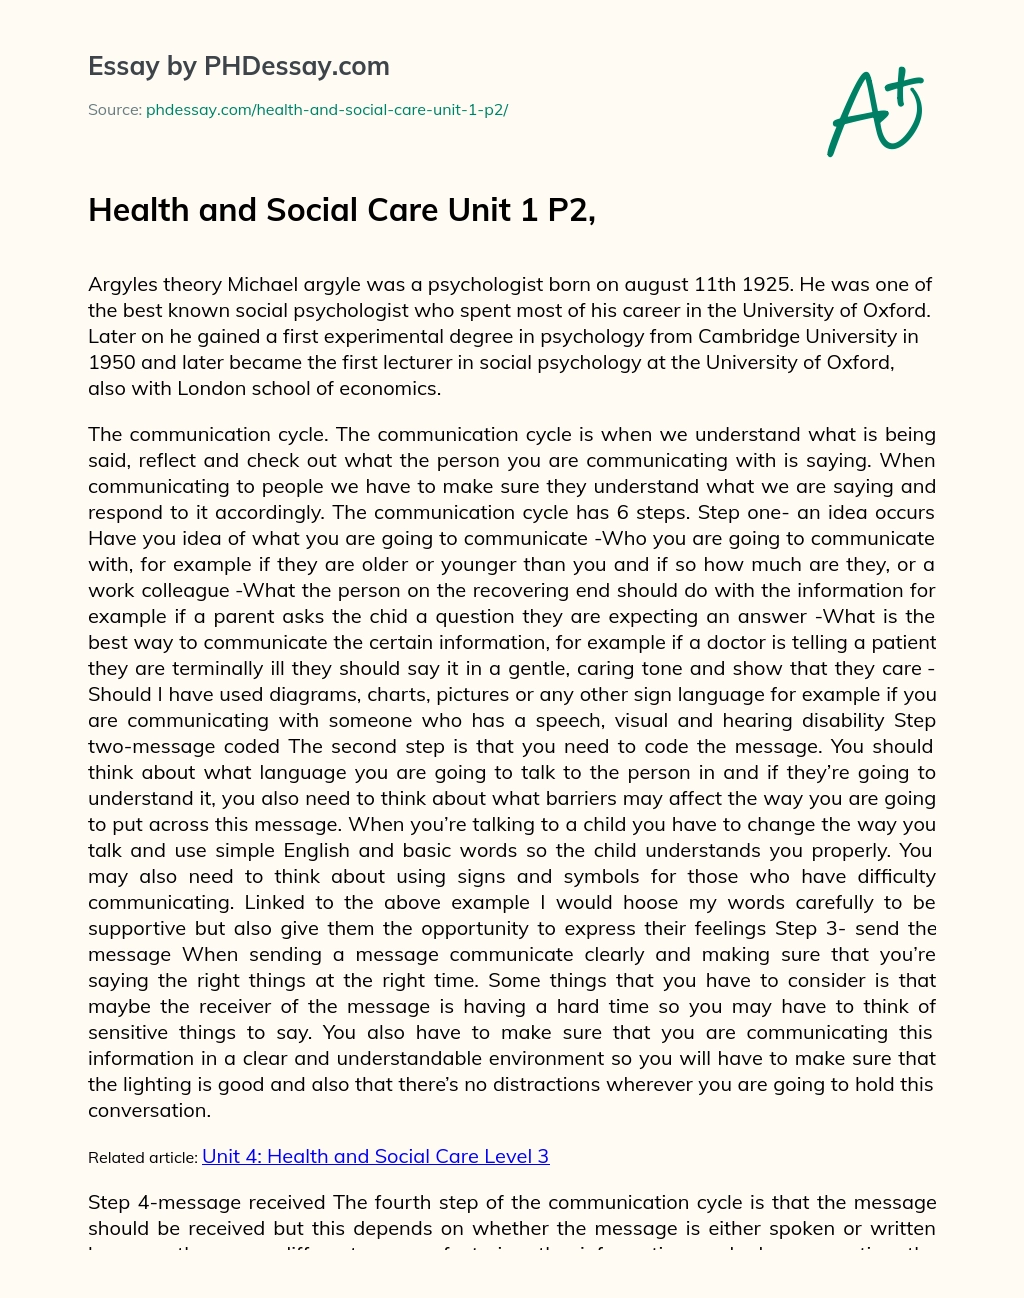 Health and Social Care Unit 1 P2, essay